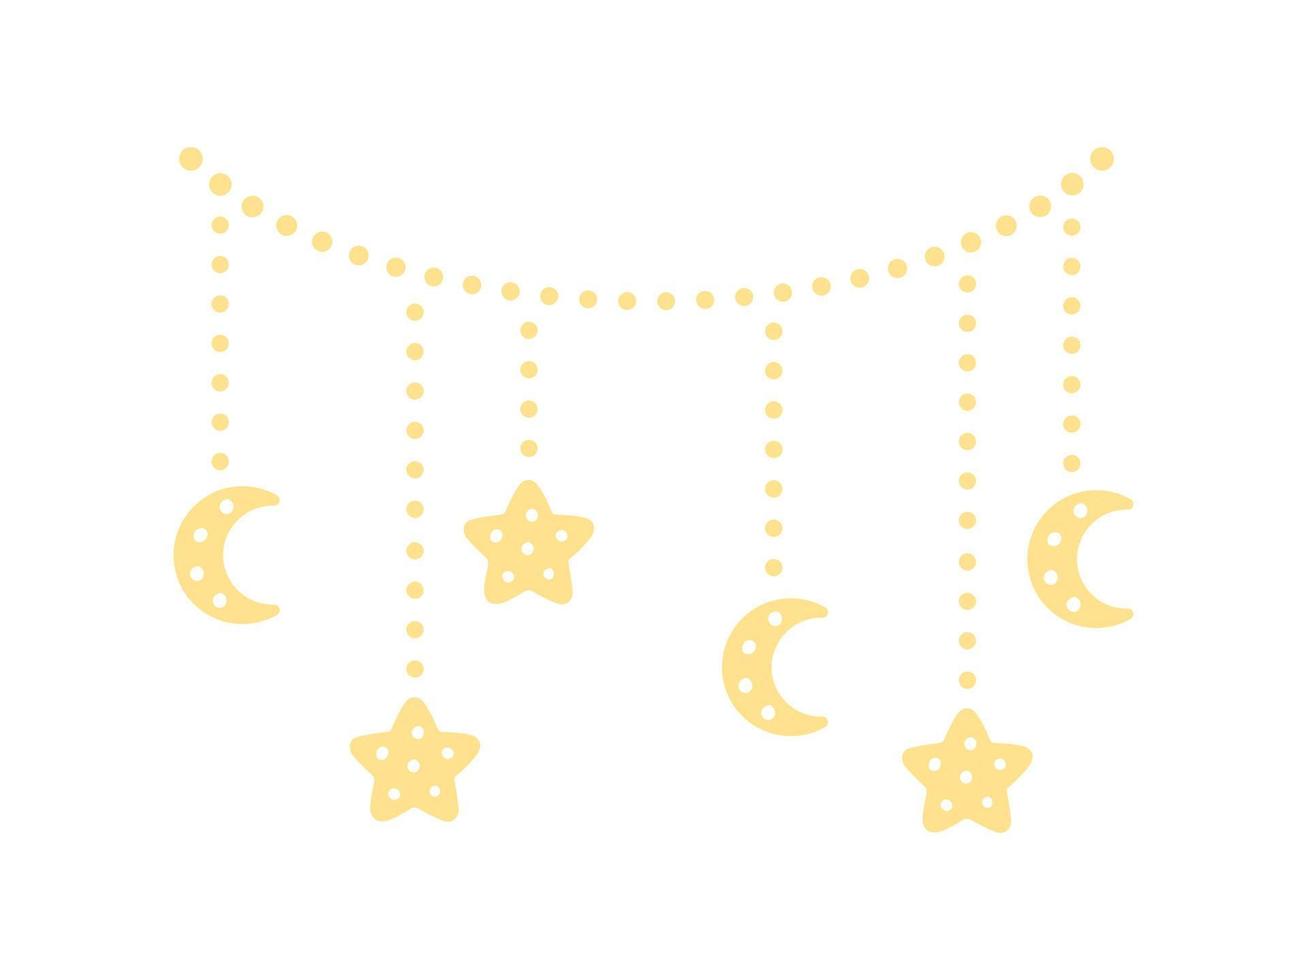 Moon and stars lights dangling bunting garland vector illustration